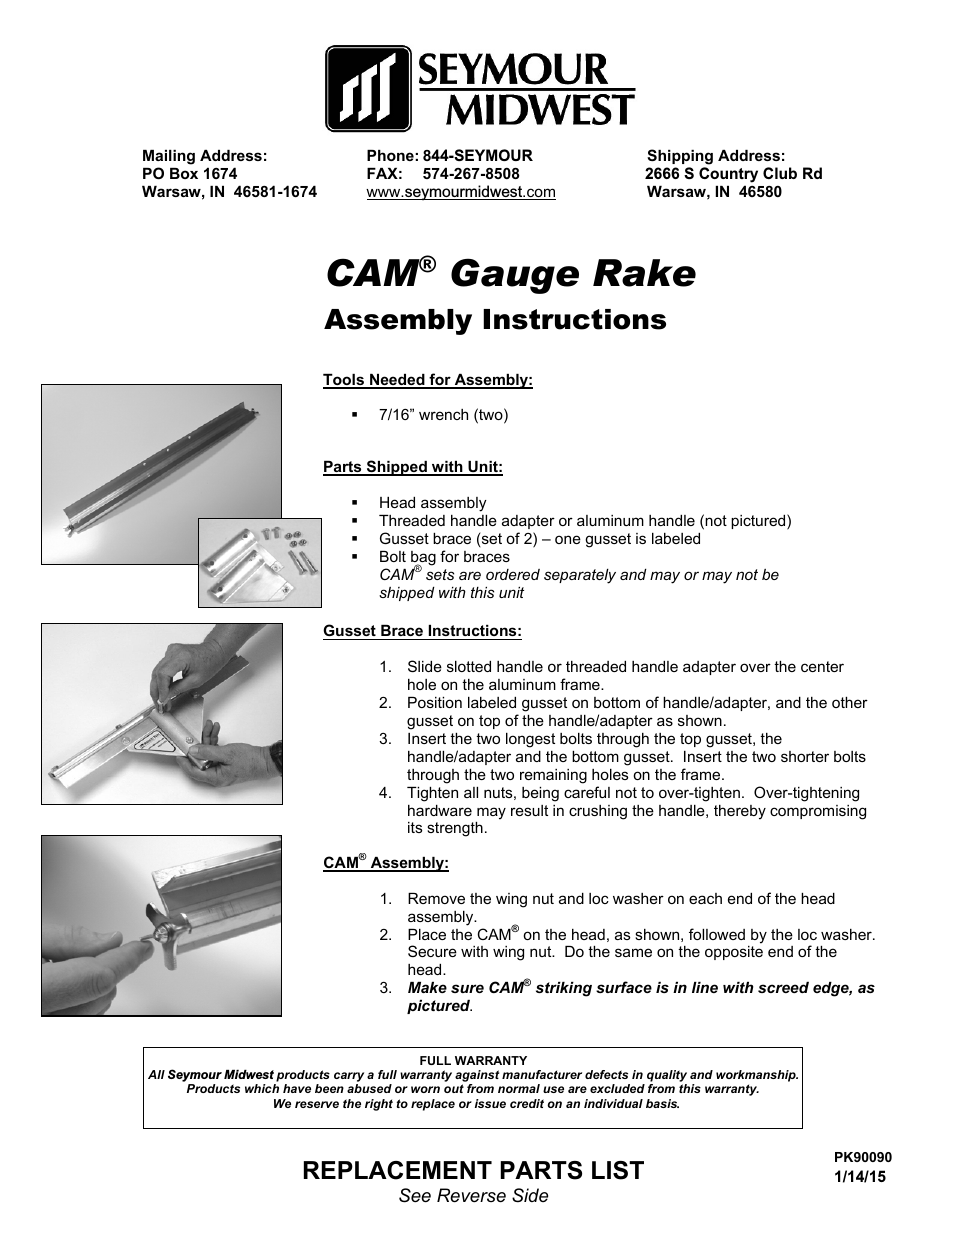 CAM® Gauge Rake(PK90090)